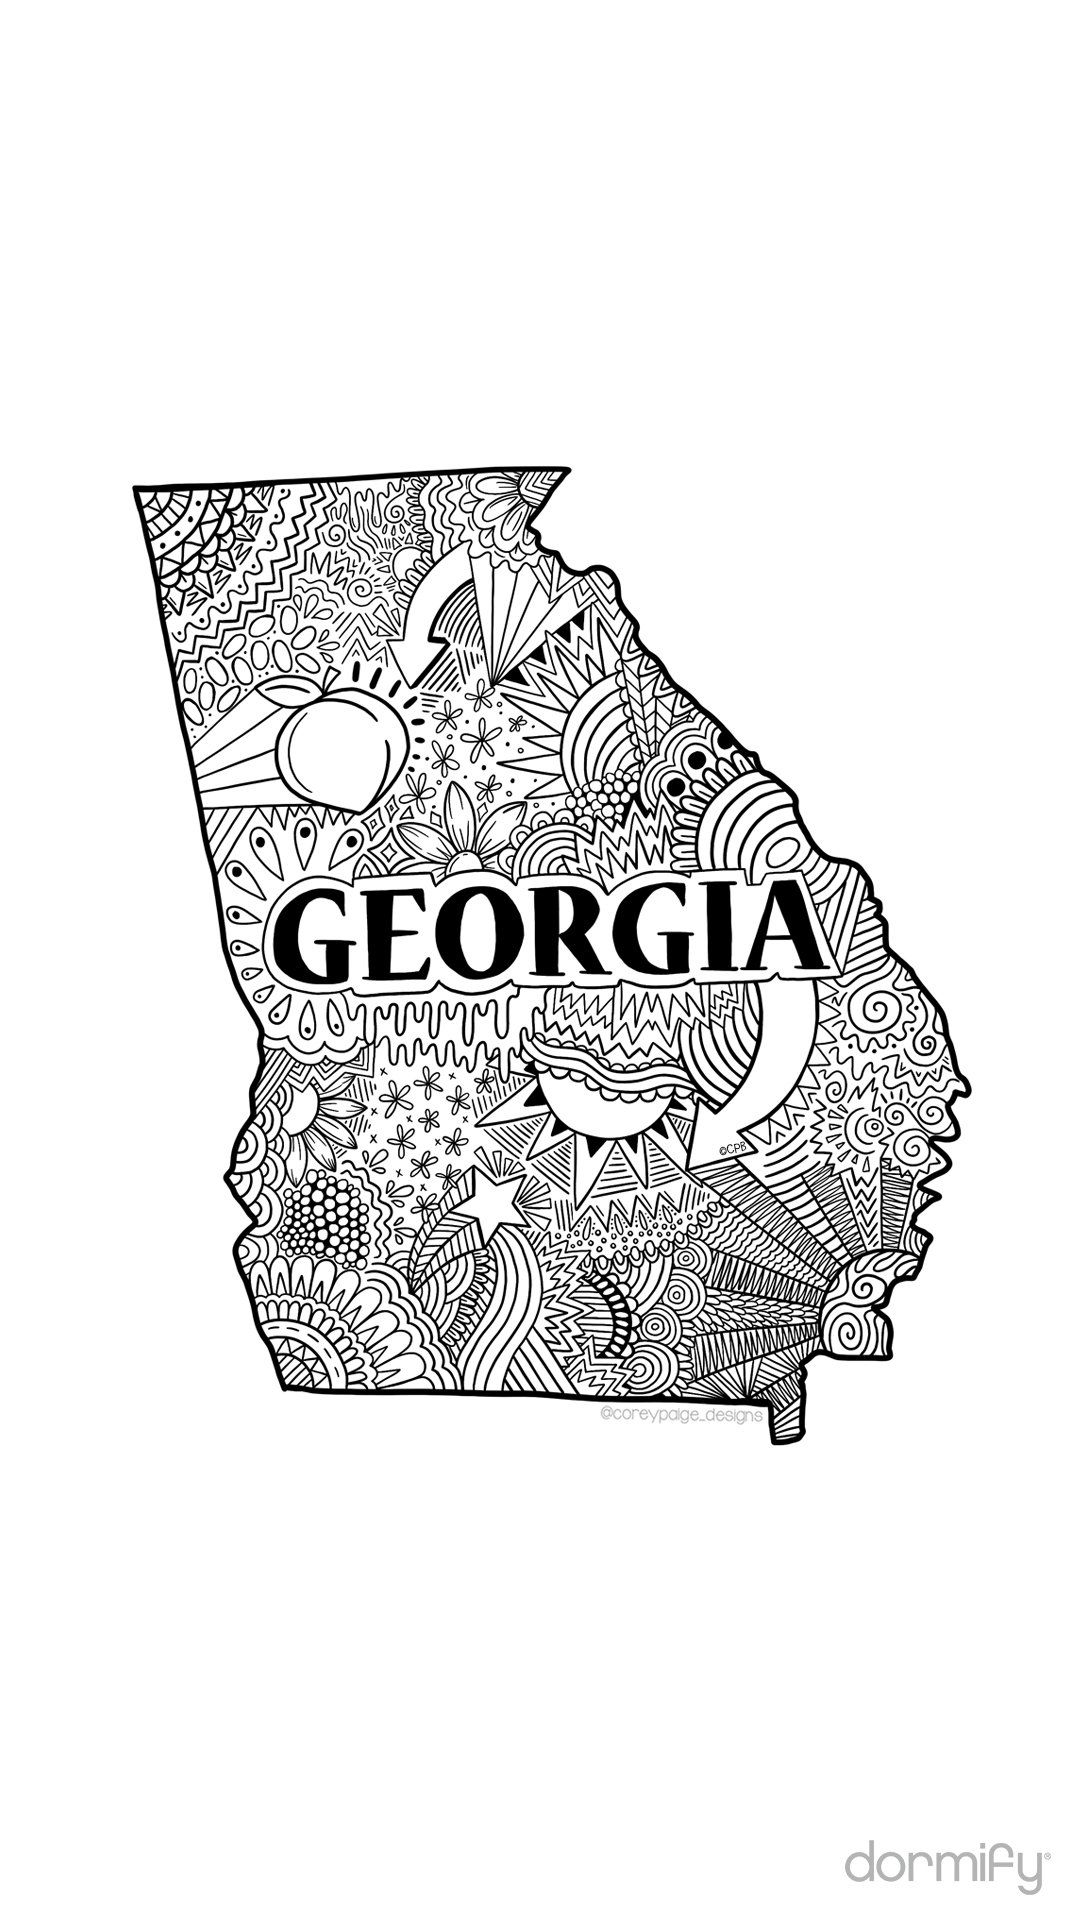 Georgia State Wallpapers